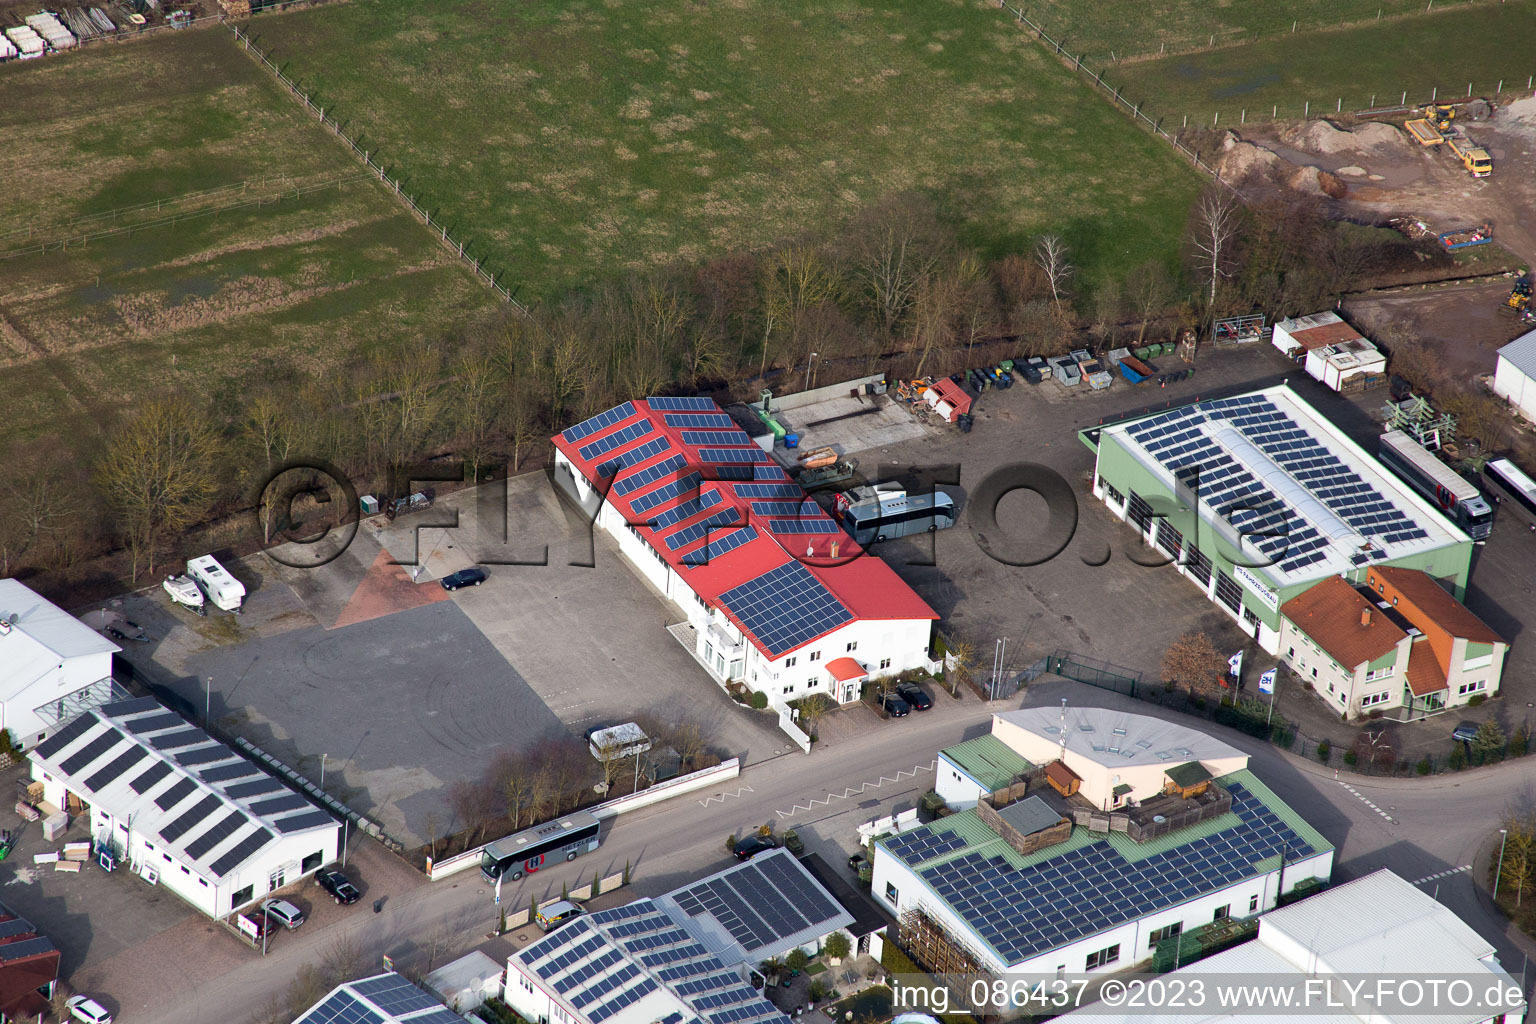 District Herxheim in Herxheim bei Landau/Pfalz in the state Rhineland-Palatinate, Germany out of the air